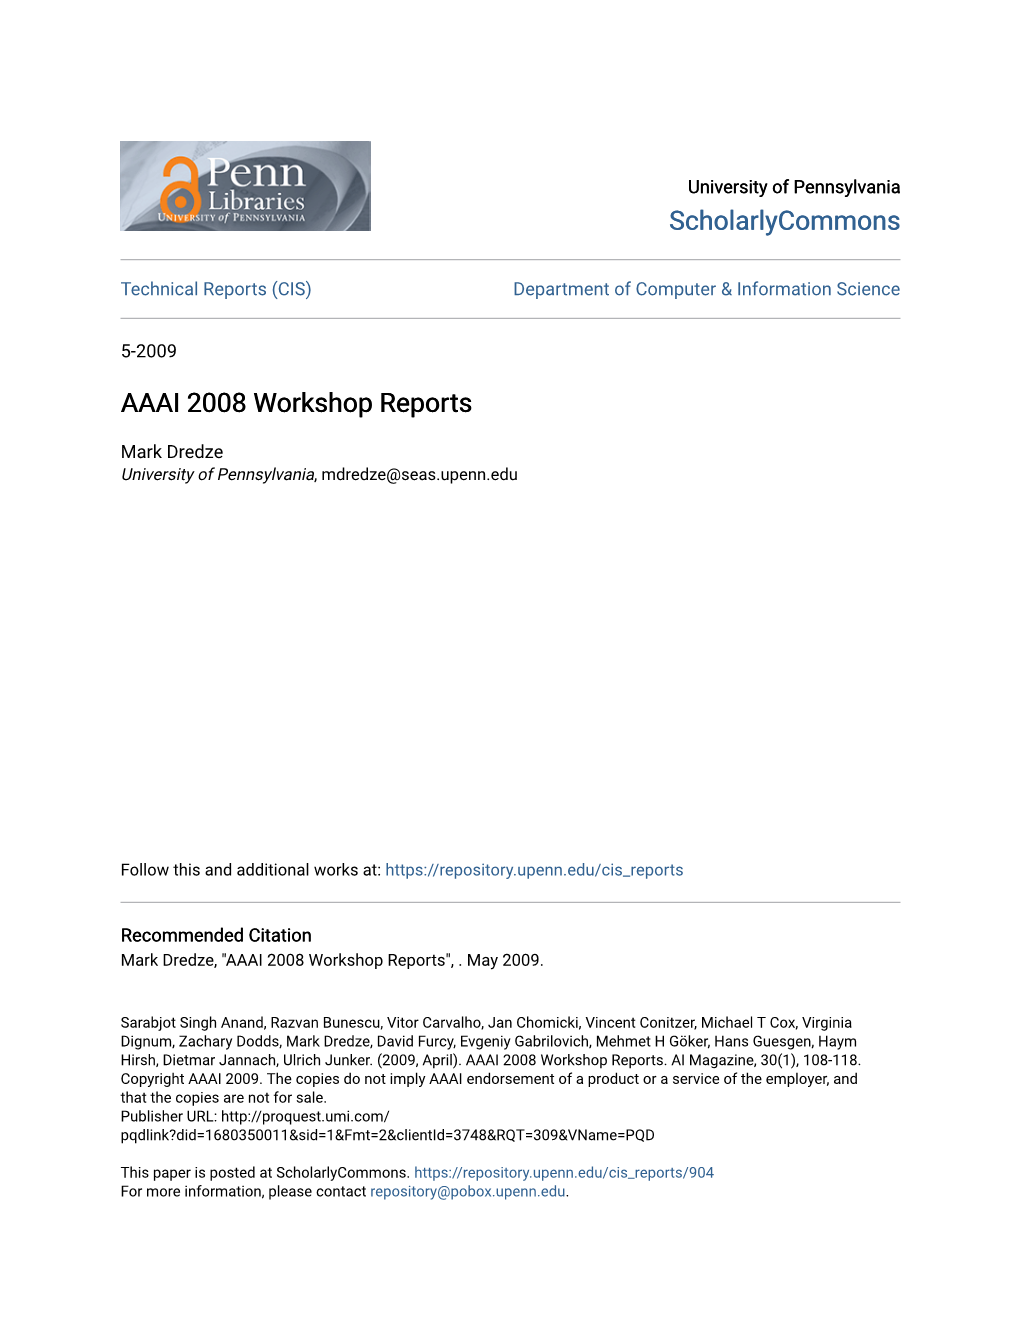 AAAI 2008 Workshop Reports